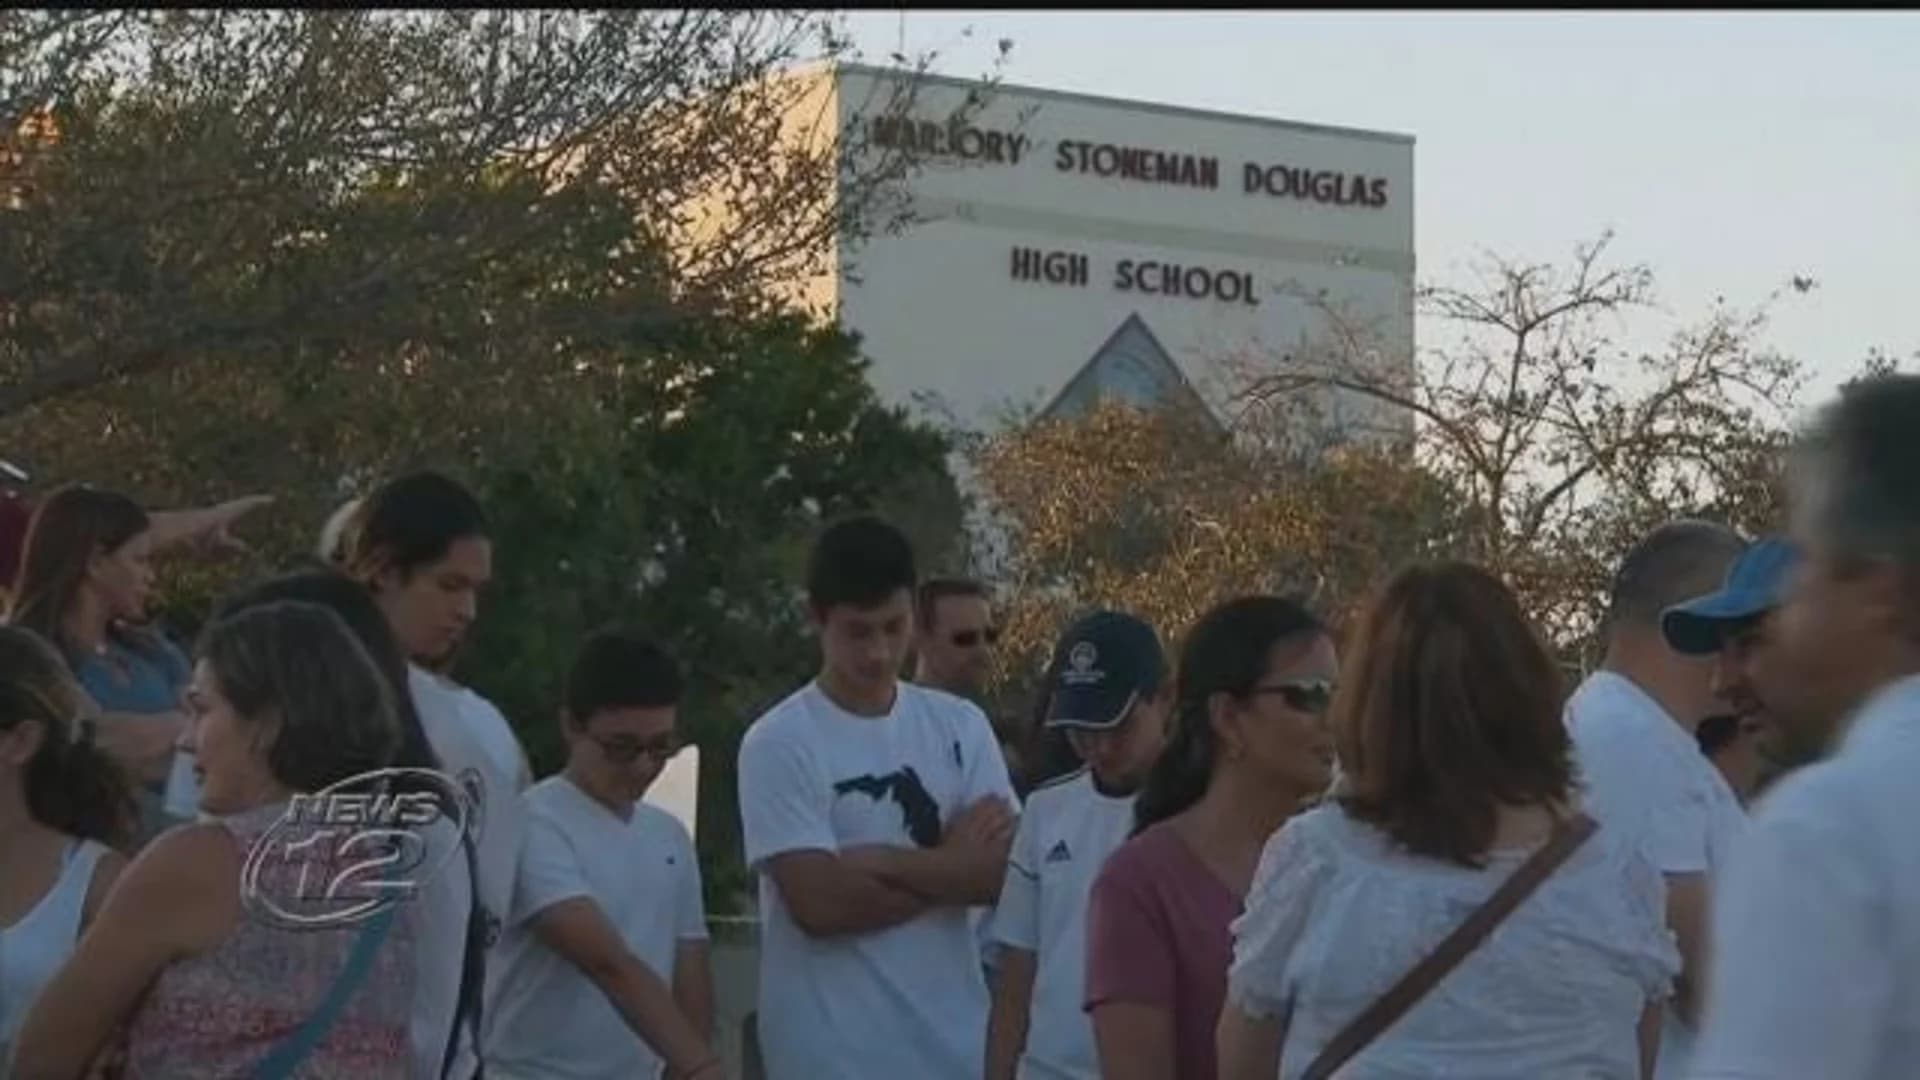 Next stop for school shooting survivors: the Florida Capitol